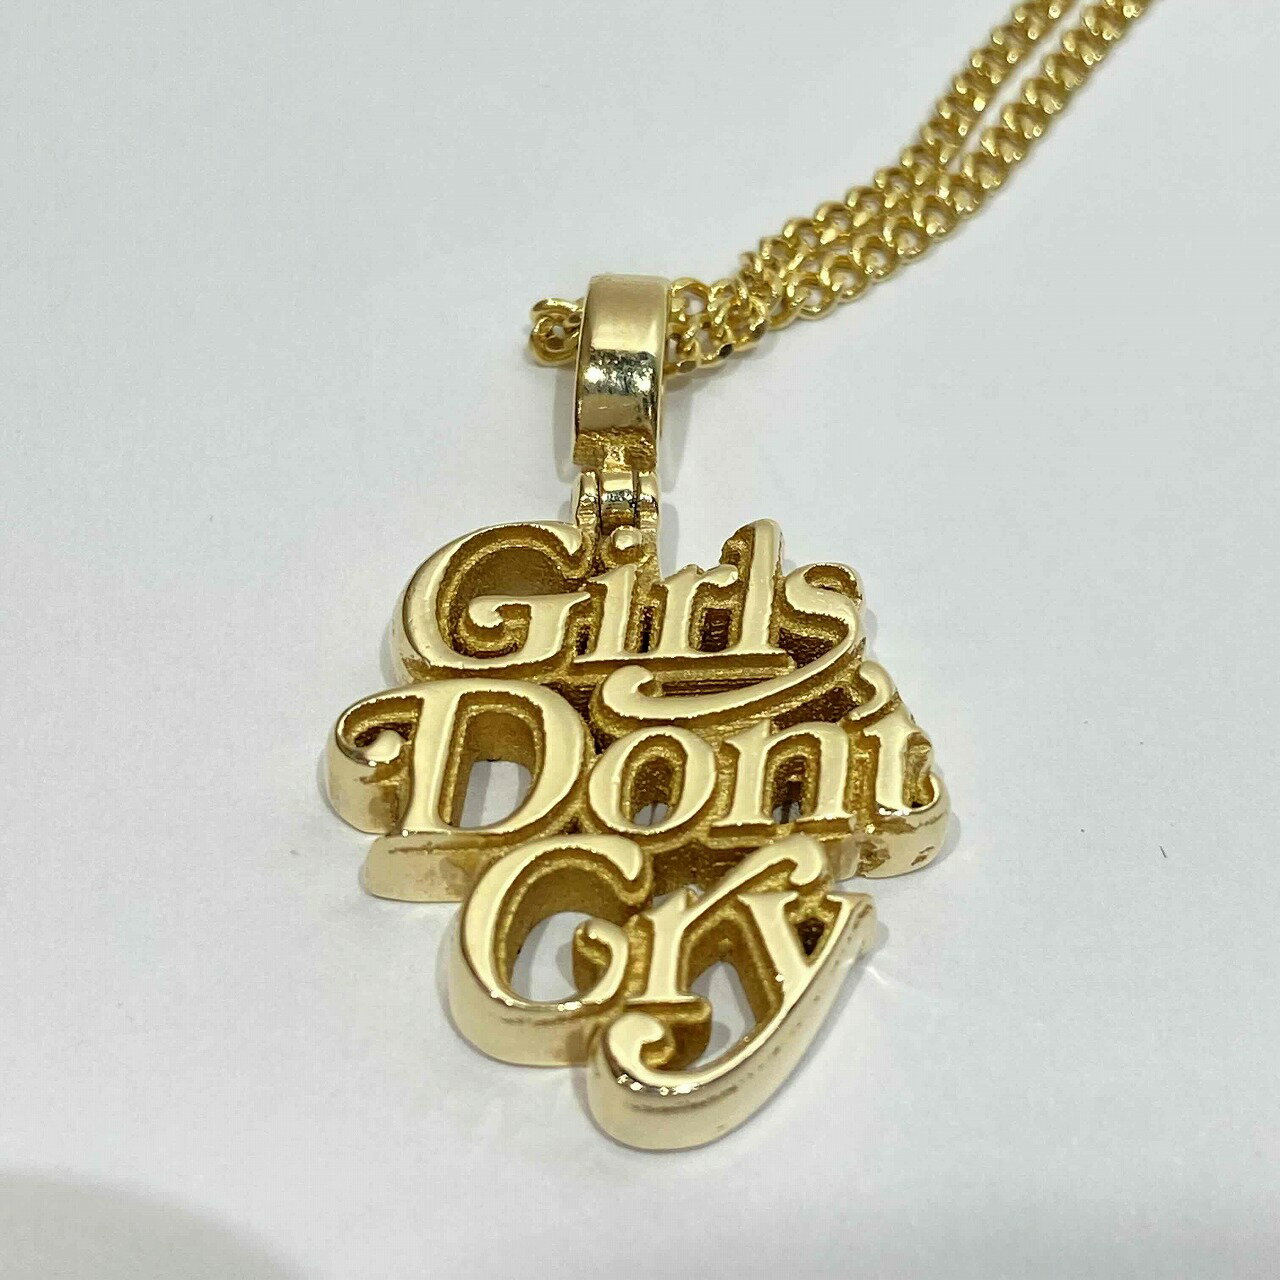 Girls Don't Cry GDC LOGO GOLD CHAIN NECKLACE ガールズドントクライ ロゴ ゴールドチェーンネックレス 心斎橋店【中古】